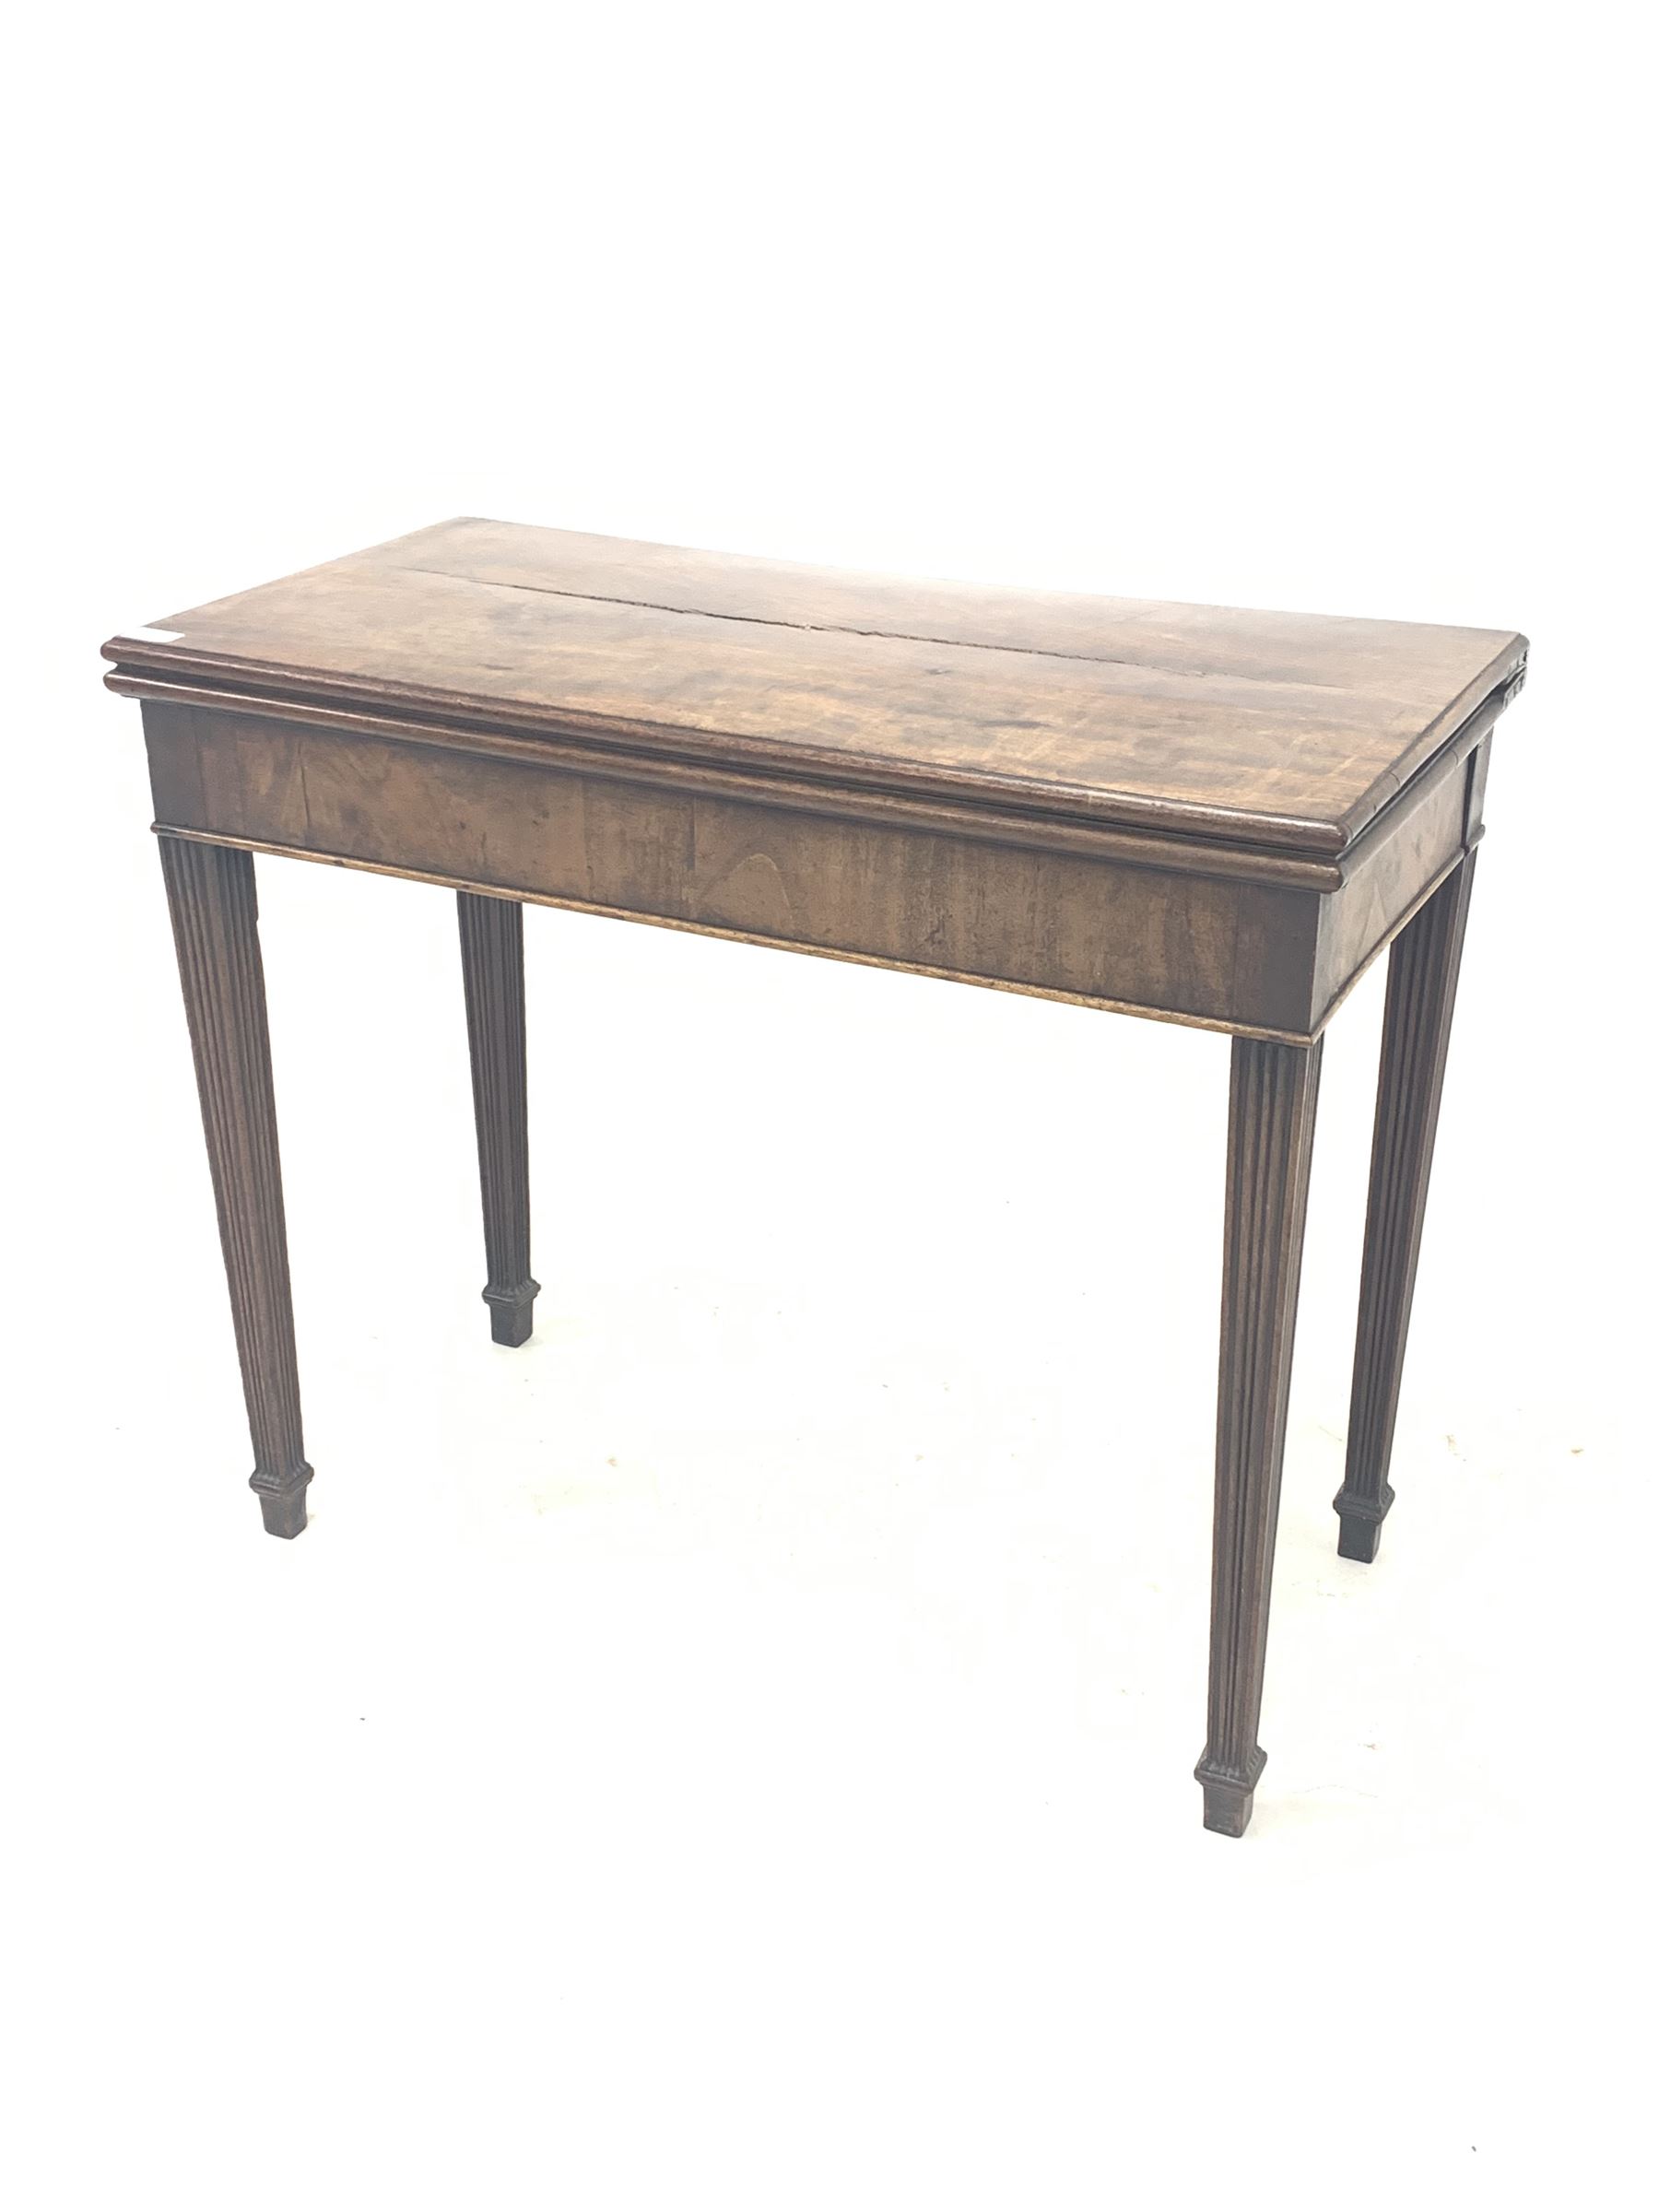 Mid 19th century Gillows design figured mahogany fold over tea table